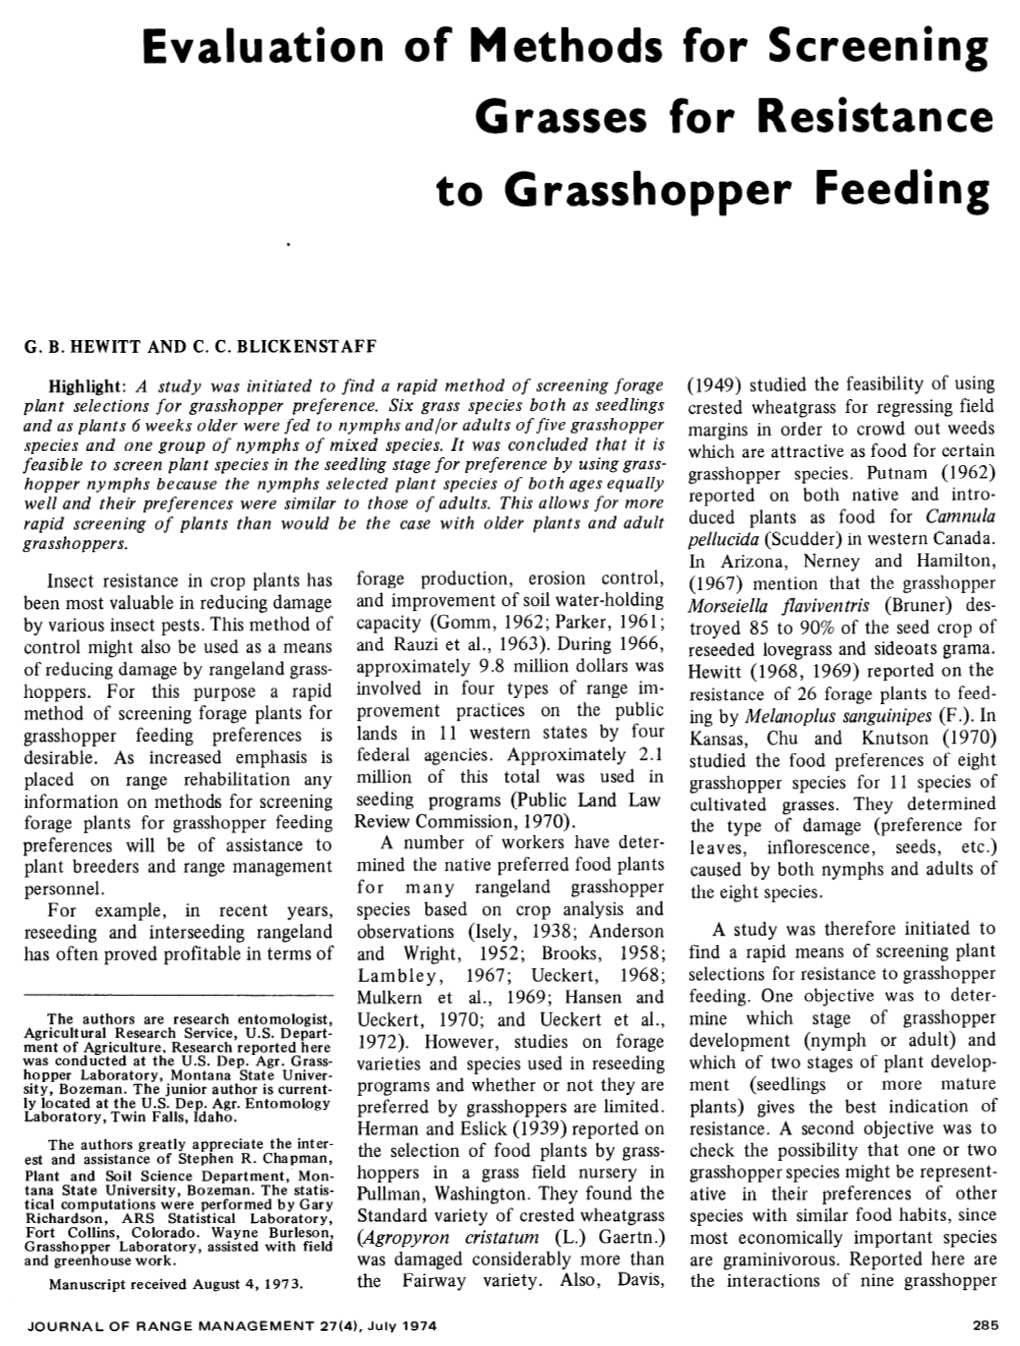 Evaluation of Methods for Screening Grasses for Resistance to Grasshopper Feeding